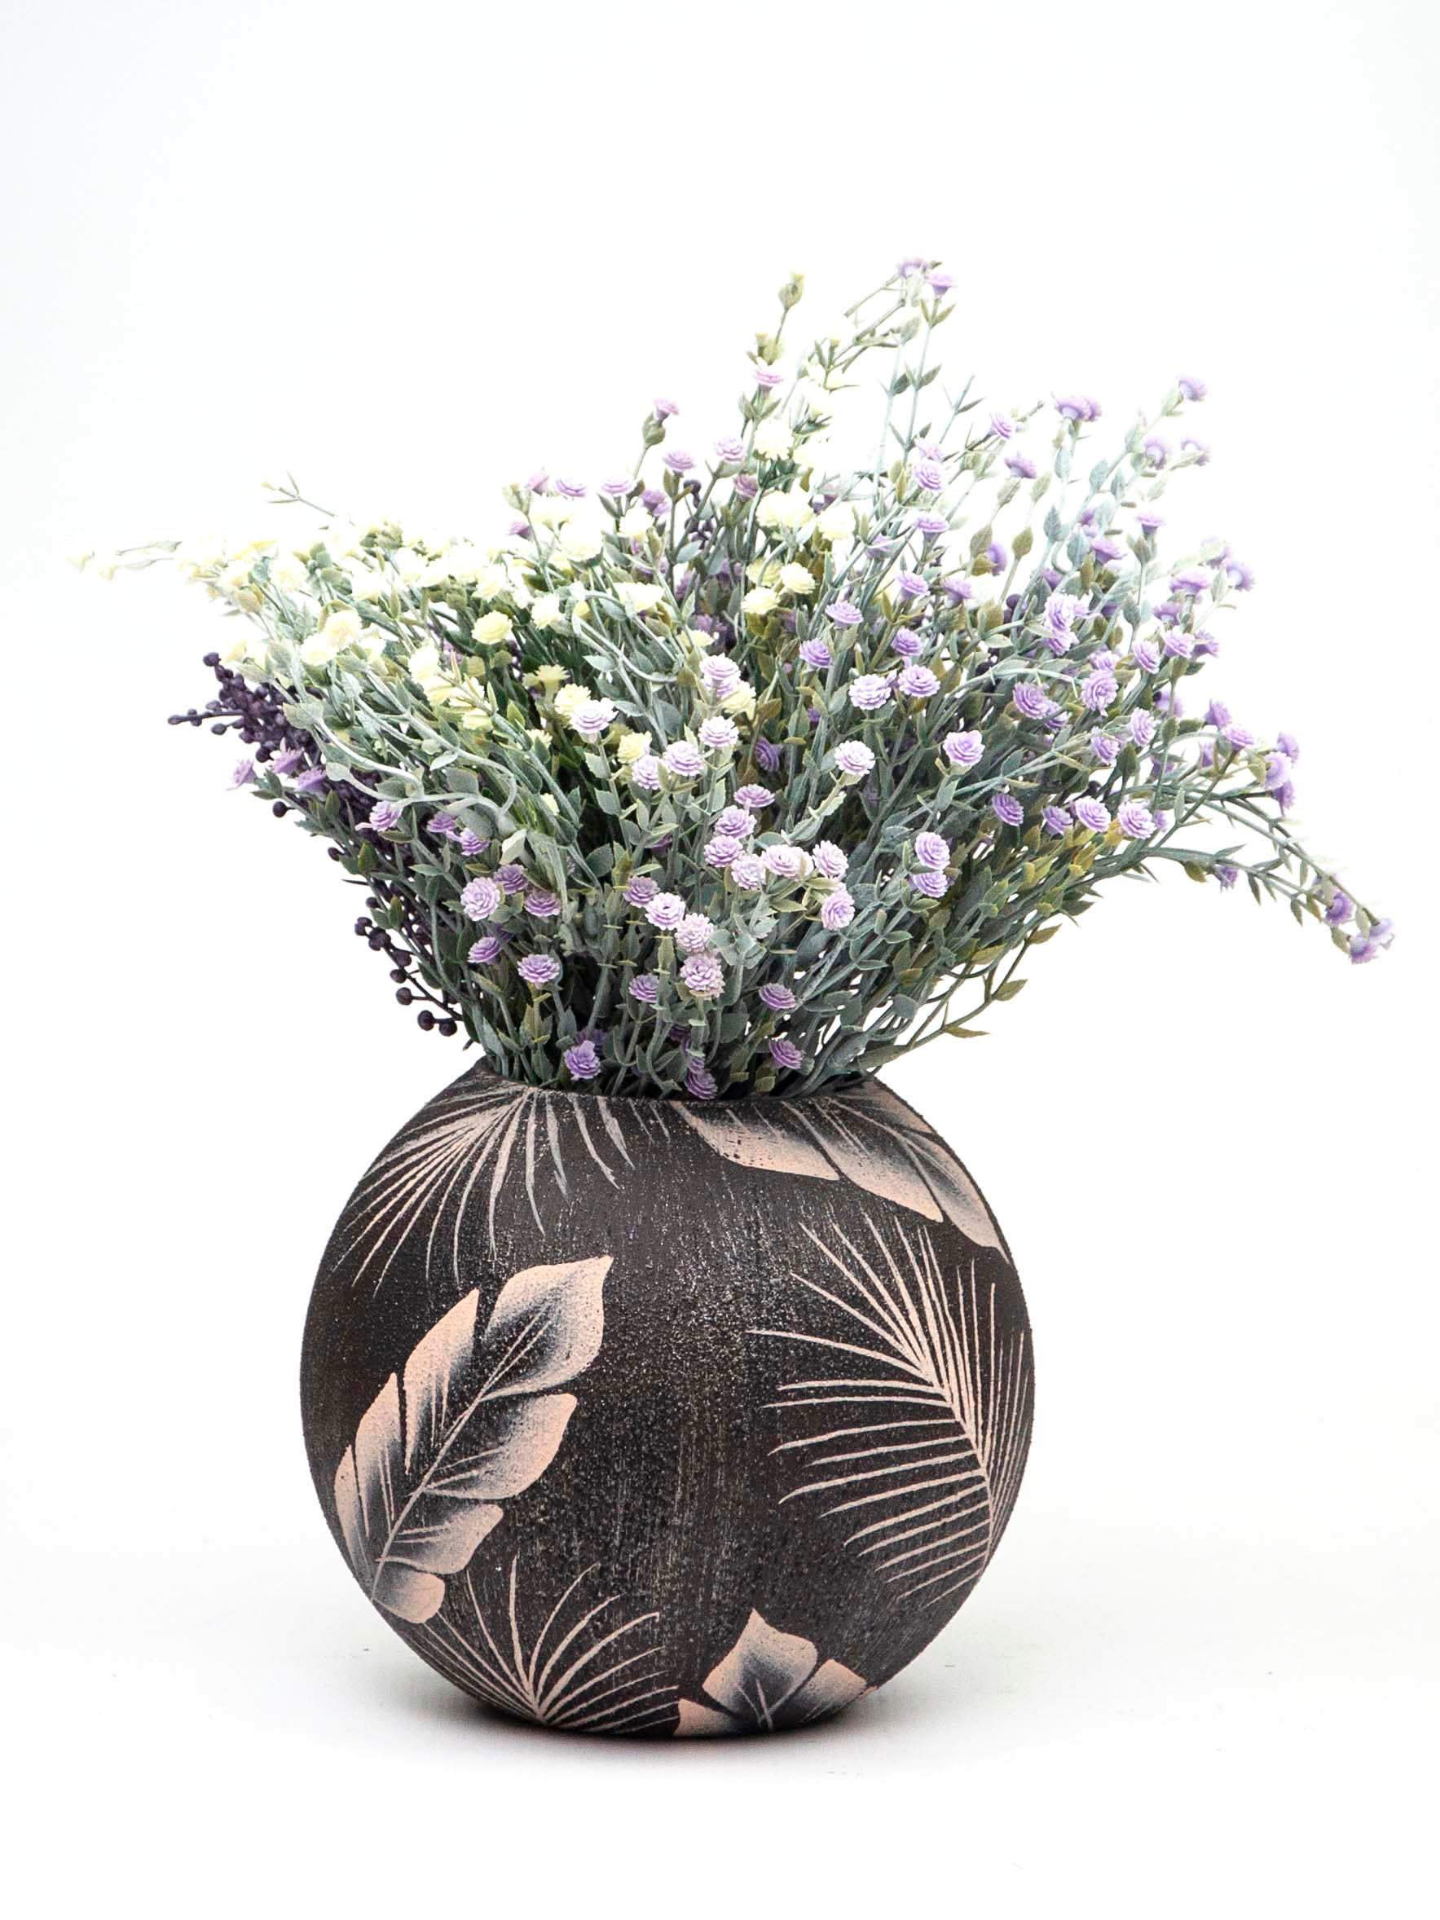 Handpainted Glass Vase for Flowers | Painted Art Glass Vase | Interior Design Home Room Decor | Table vase 6 inch